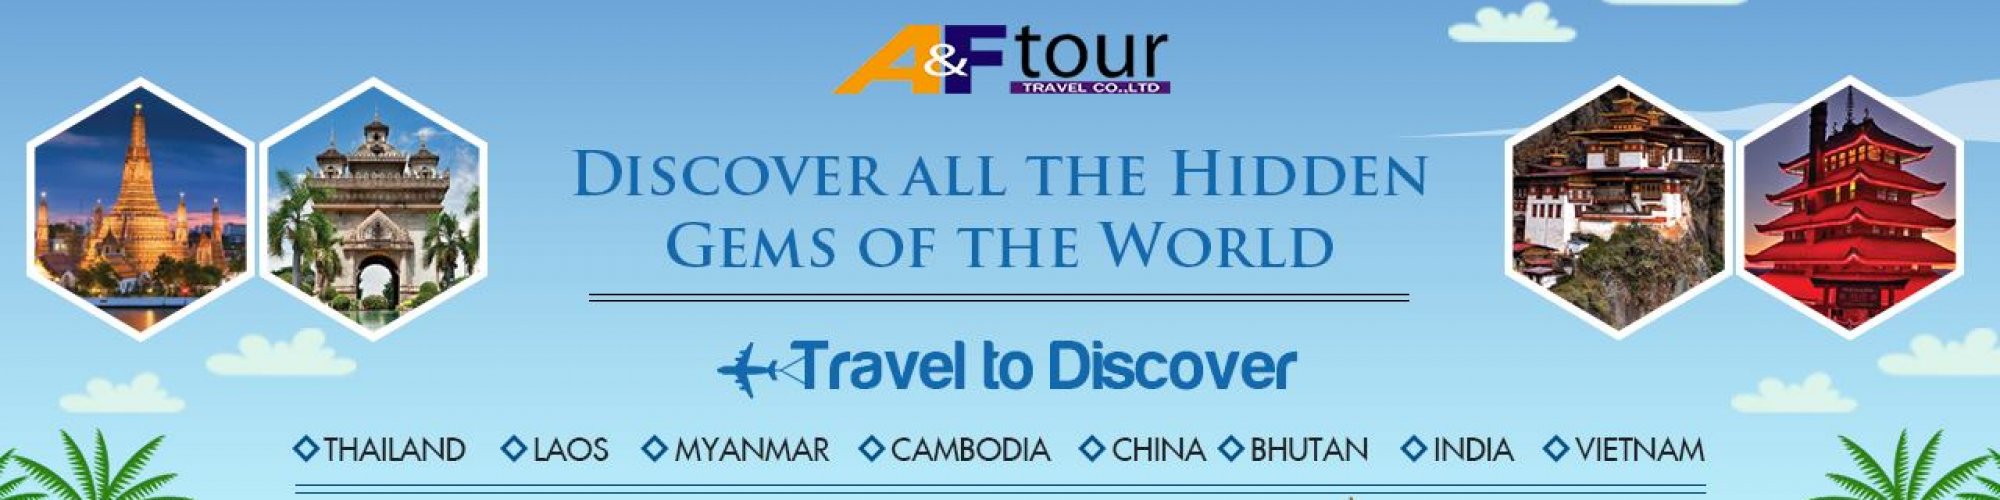 A&F Tour Travel